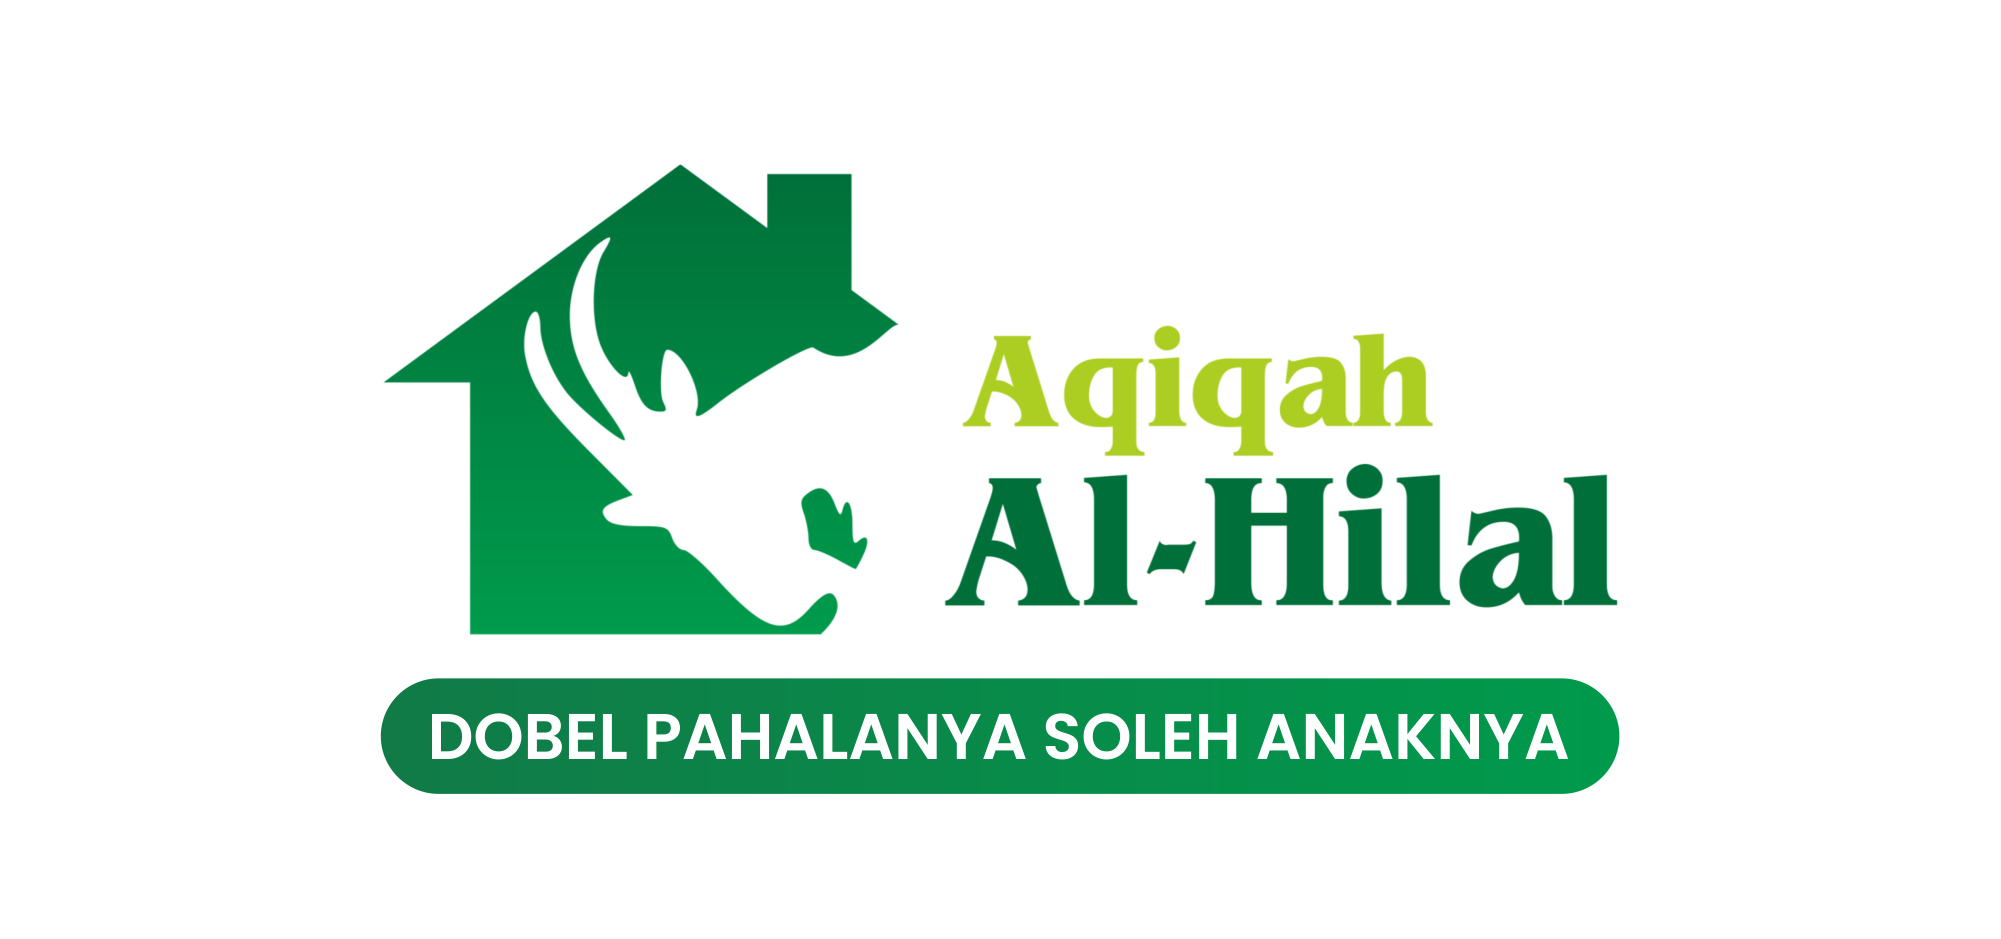 Aqiqah di Bandung | Aqiqah Al-Hilal